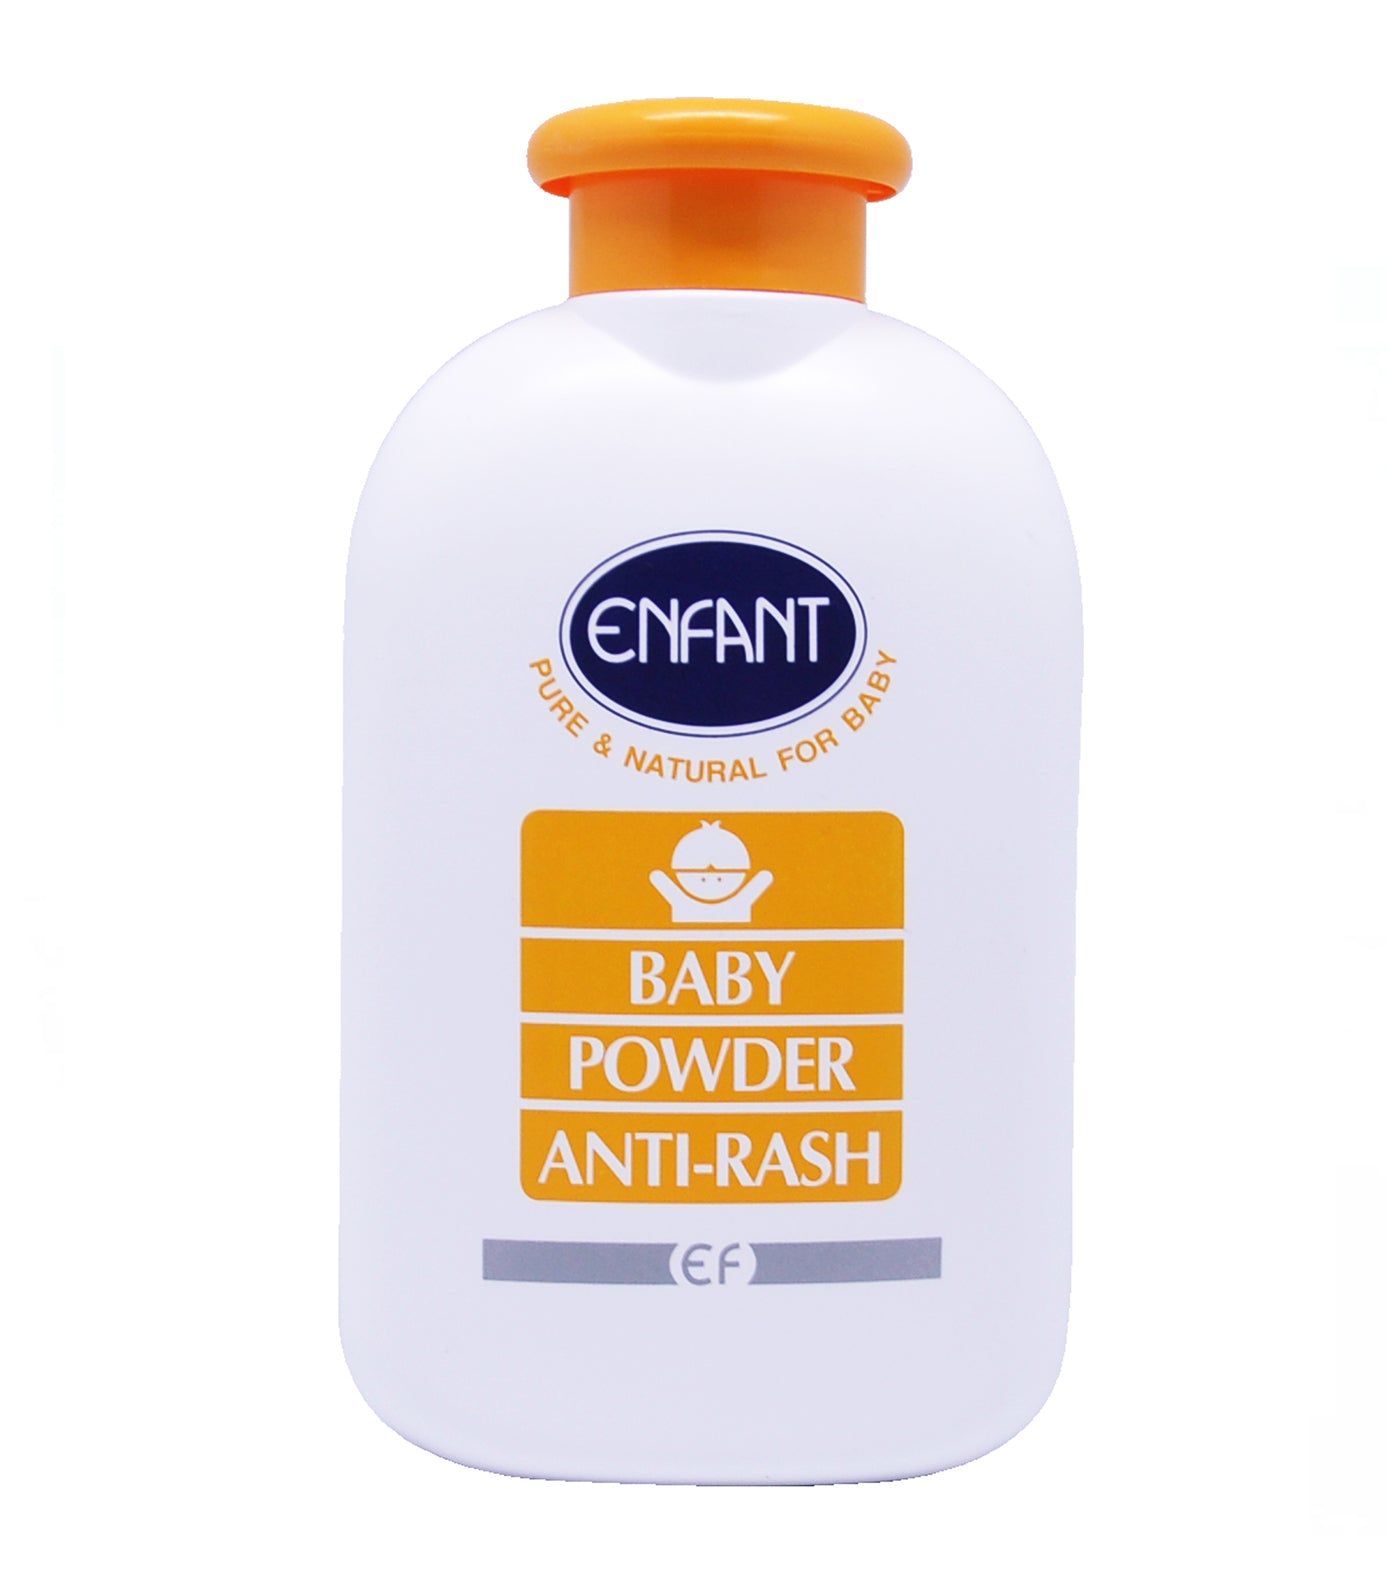 Free Anti-Rash Baby Powder - 300g